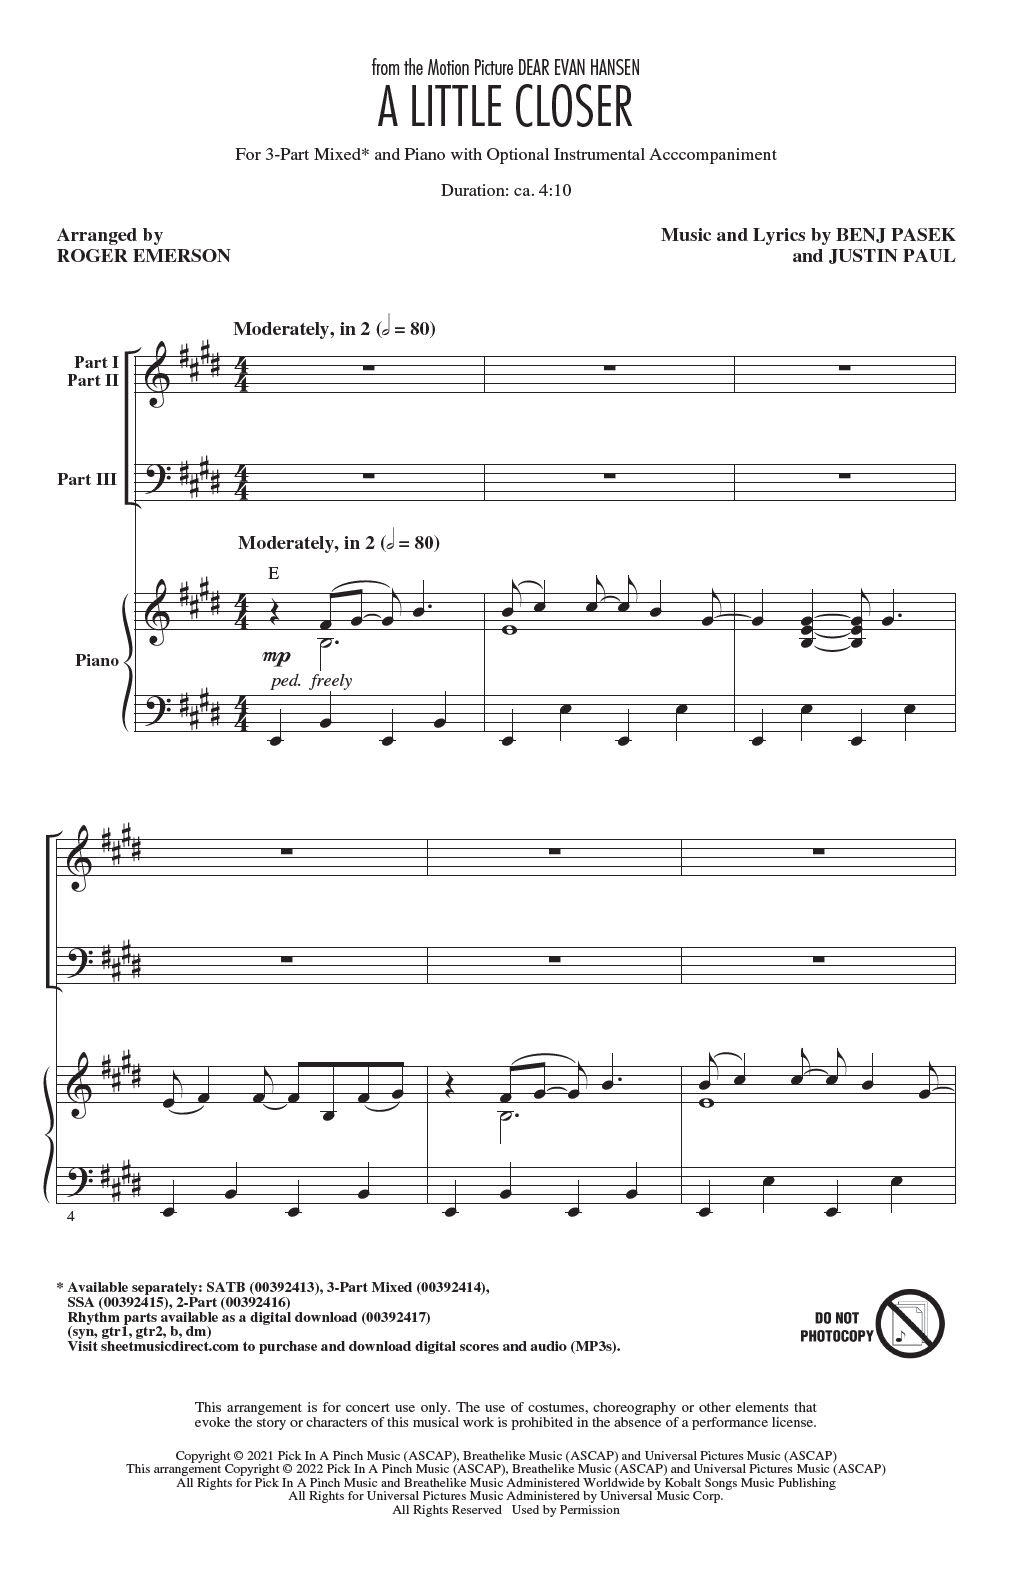 Pasek & Paul A Little Closer (from Dear Evan Hansen) (arr. Roger Emerson) Sheet Music Notes & Chords for SATB Choir - Download or Print PDF